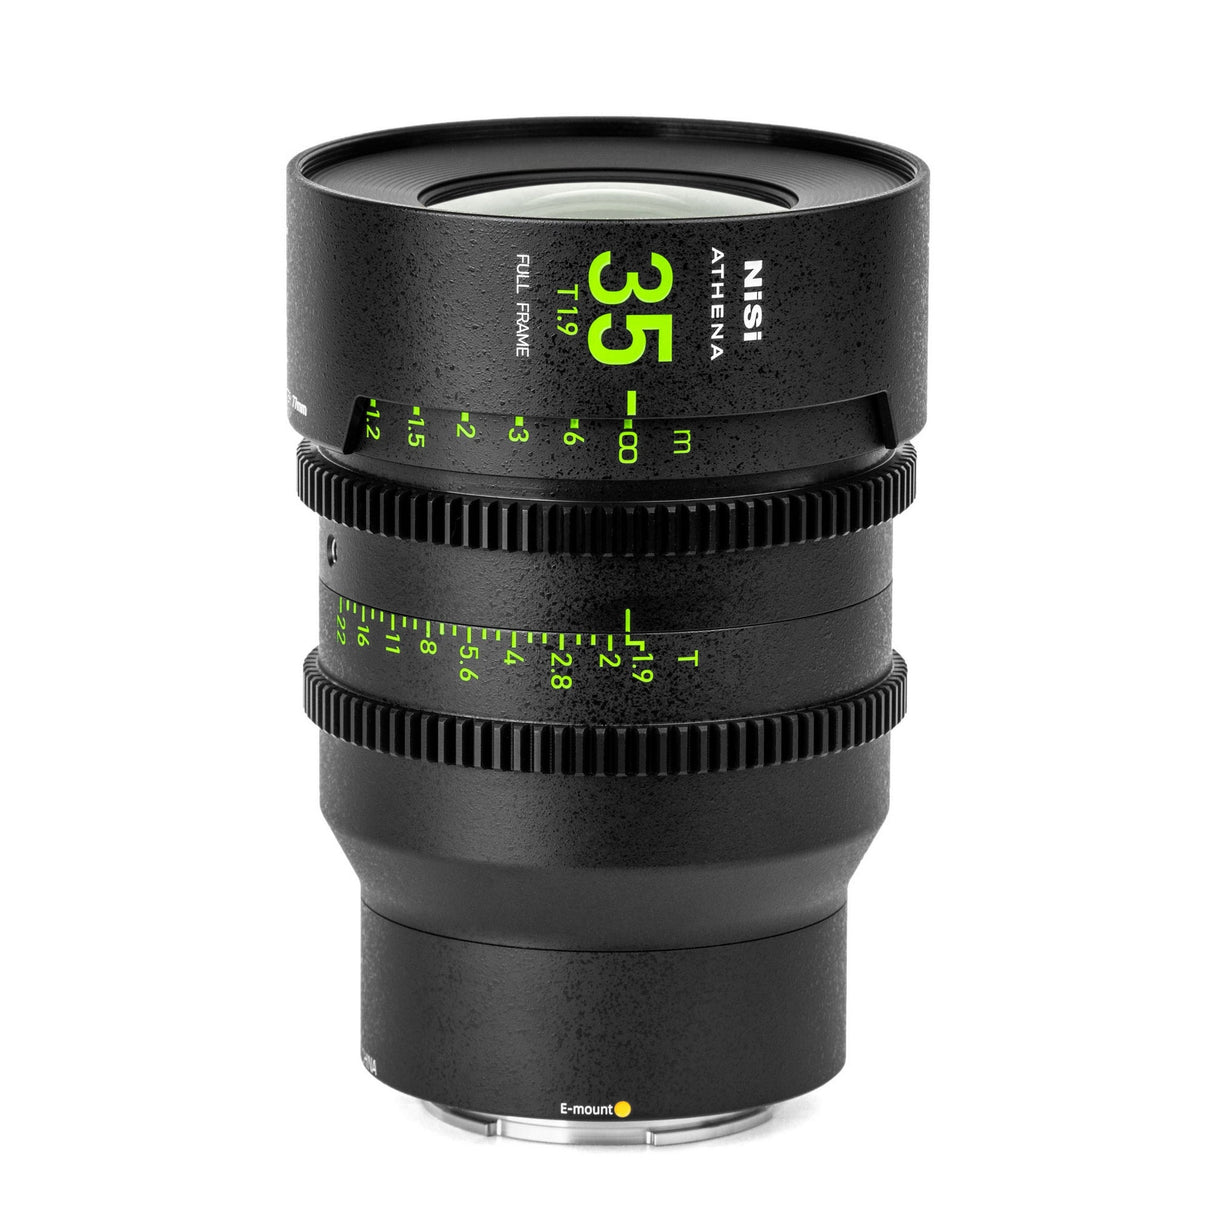 NiSi ATHENA PRIME Full Frame Cinema Lens, E Mount (14mm T2.4, 25mm T1.9, 35mm T1.9, 50mm T1.9, 85mm T1.9)